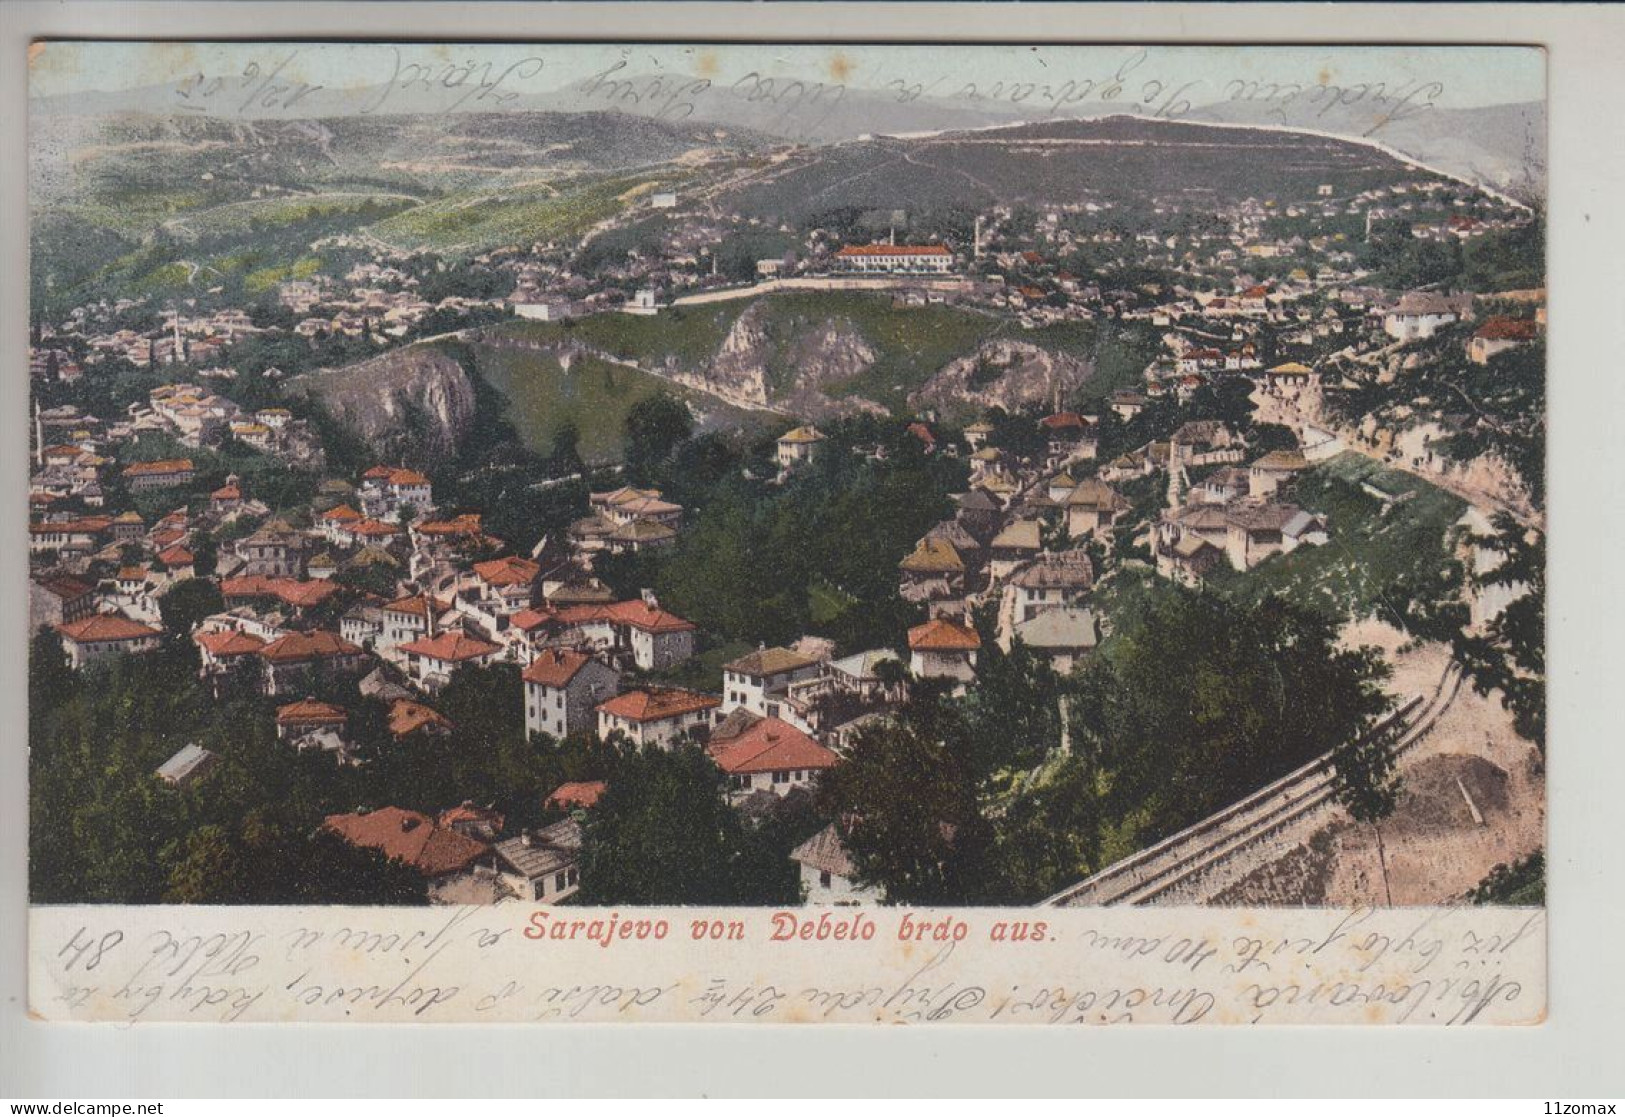 589_001 Sarajevo bahn strecke railway line from Debelo Brdo used 1905.jpg